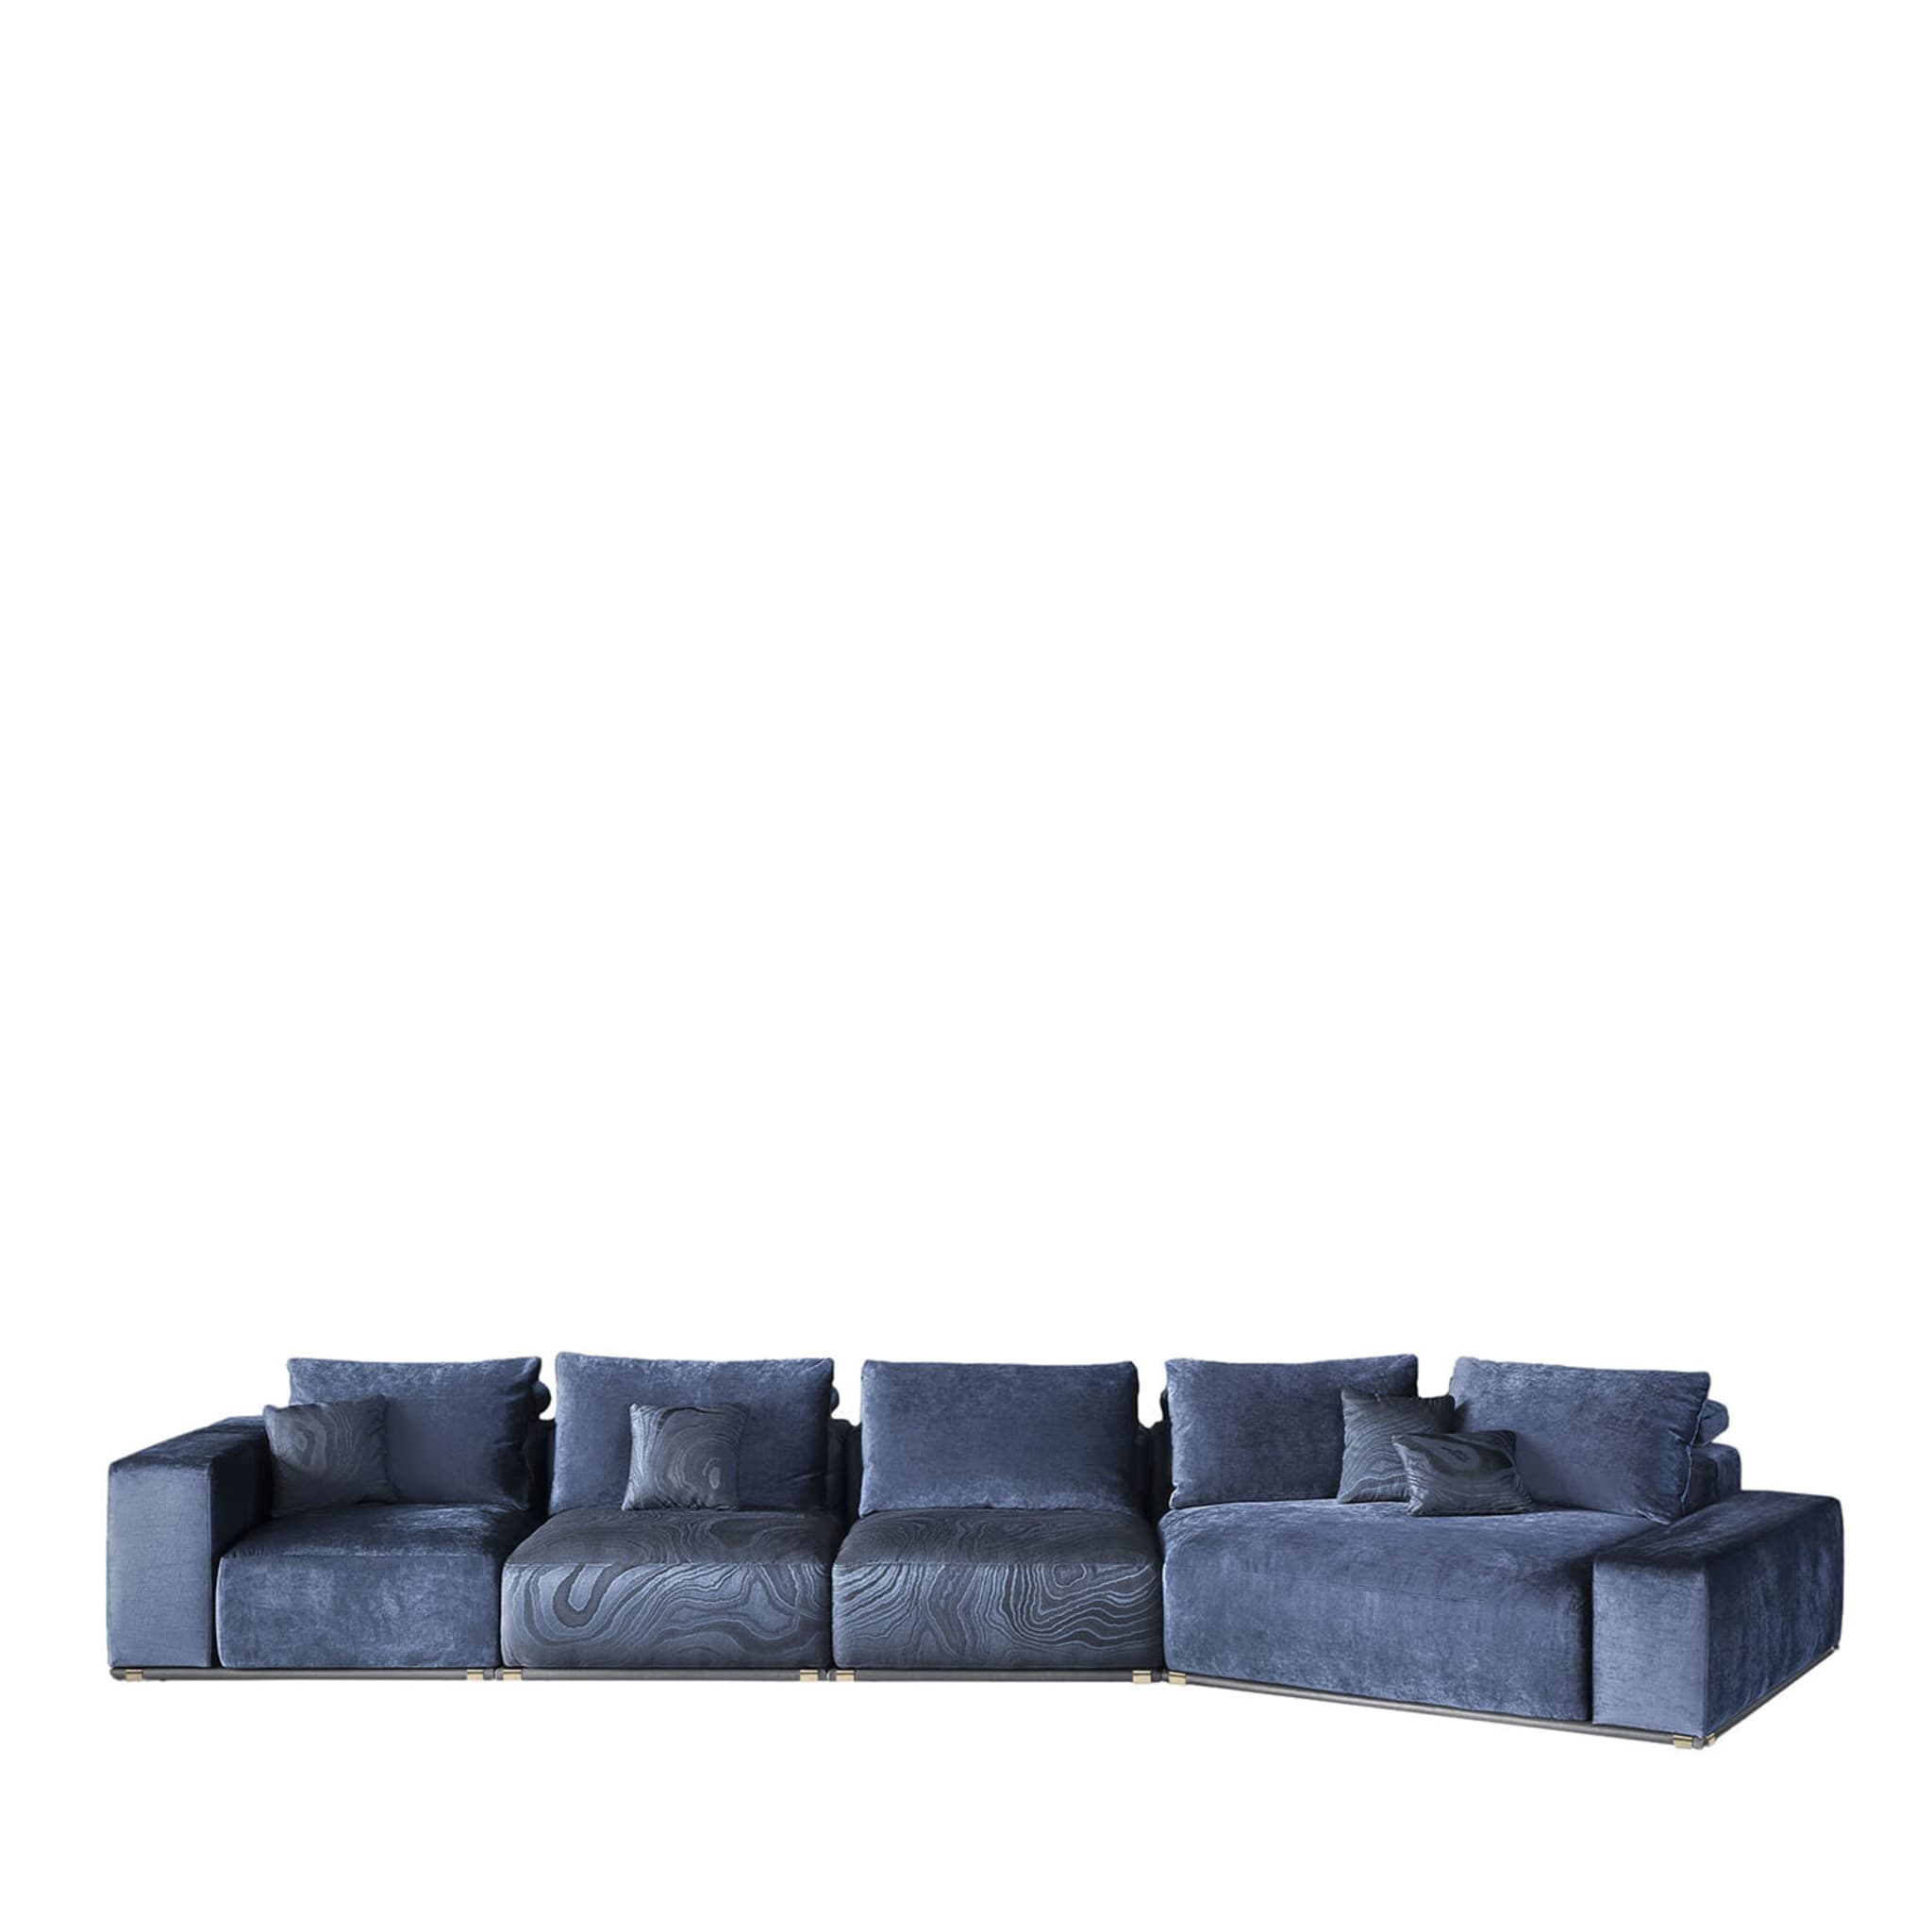 Zeno Modular Blaues Sofa #2 - Hauptansicht